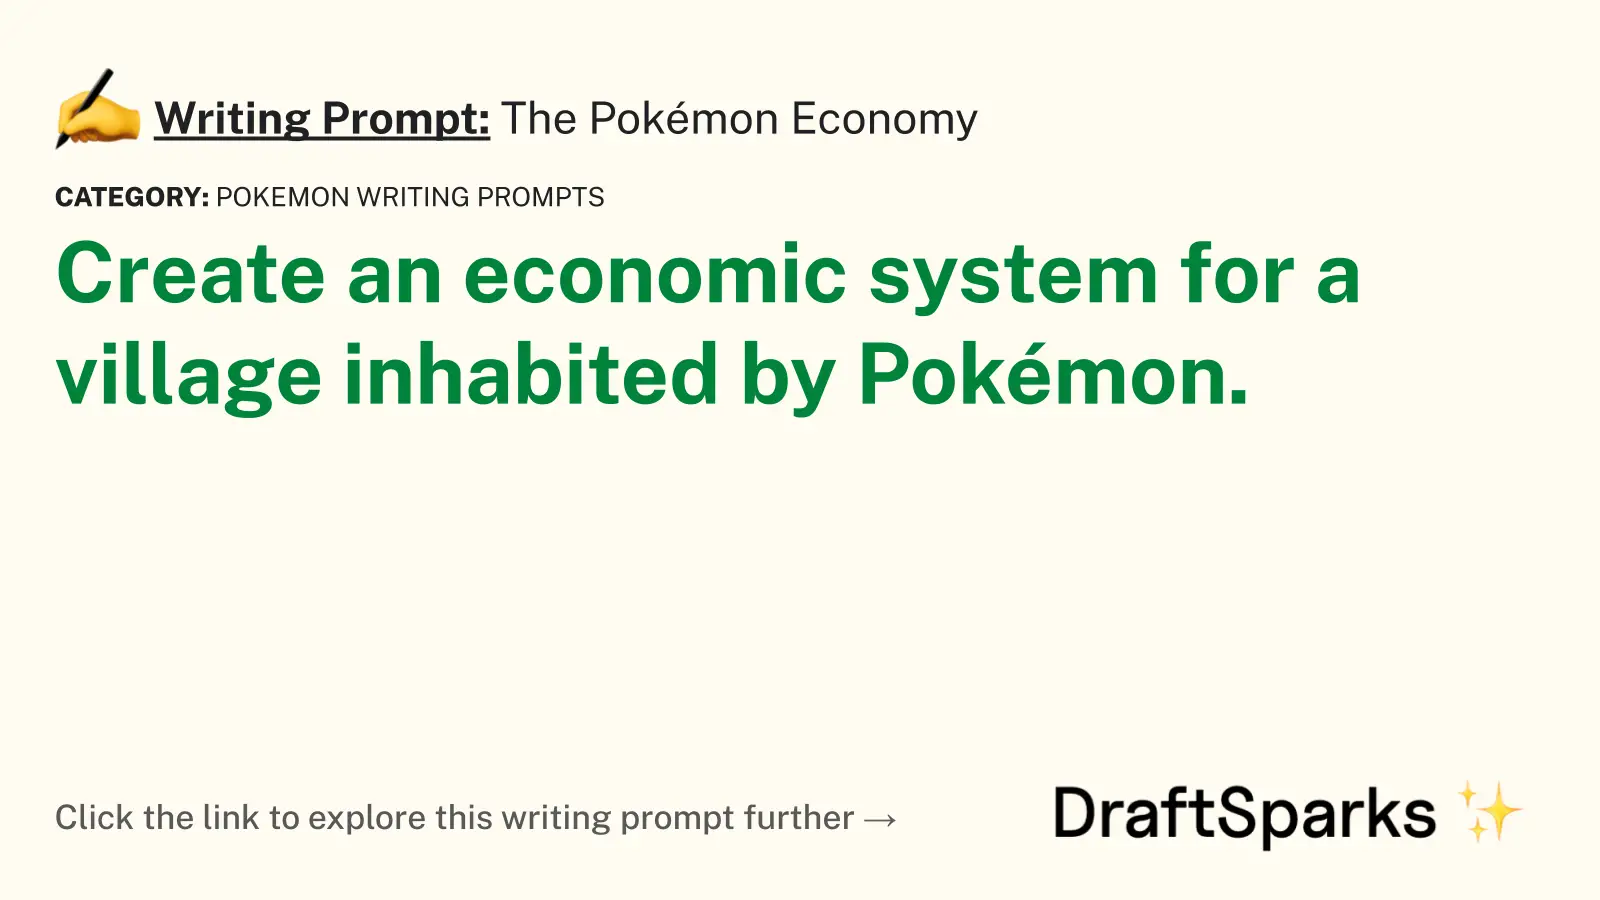 The Pokémon Economy